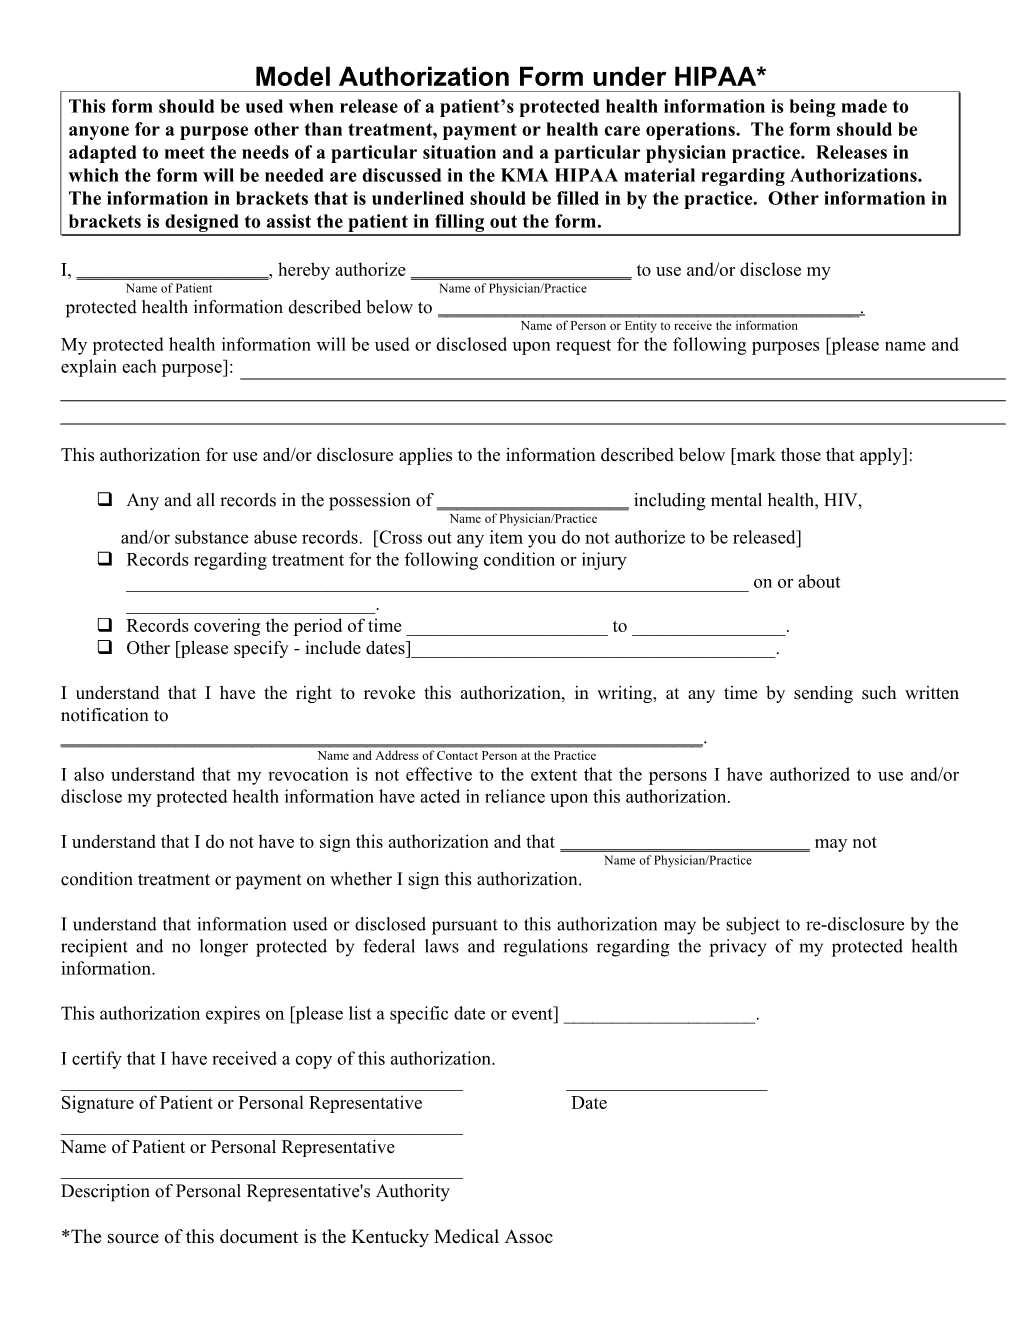 Model Authorization Form Under HIPAA*